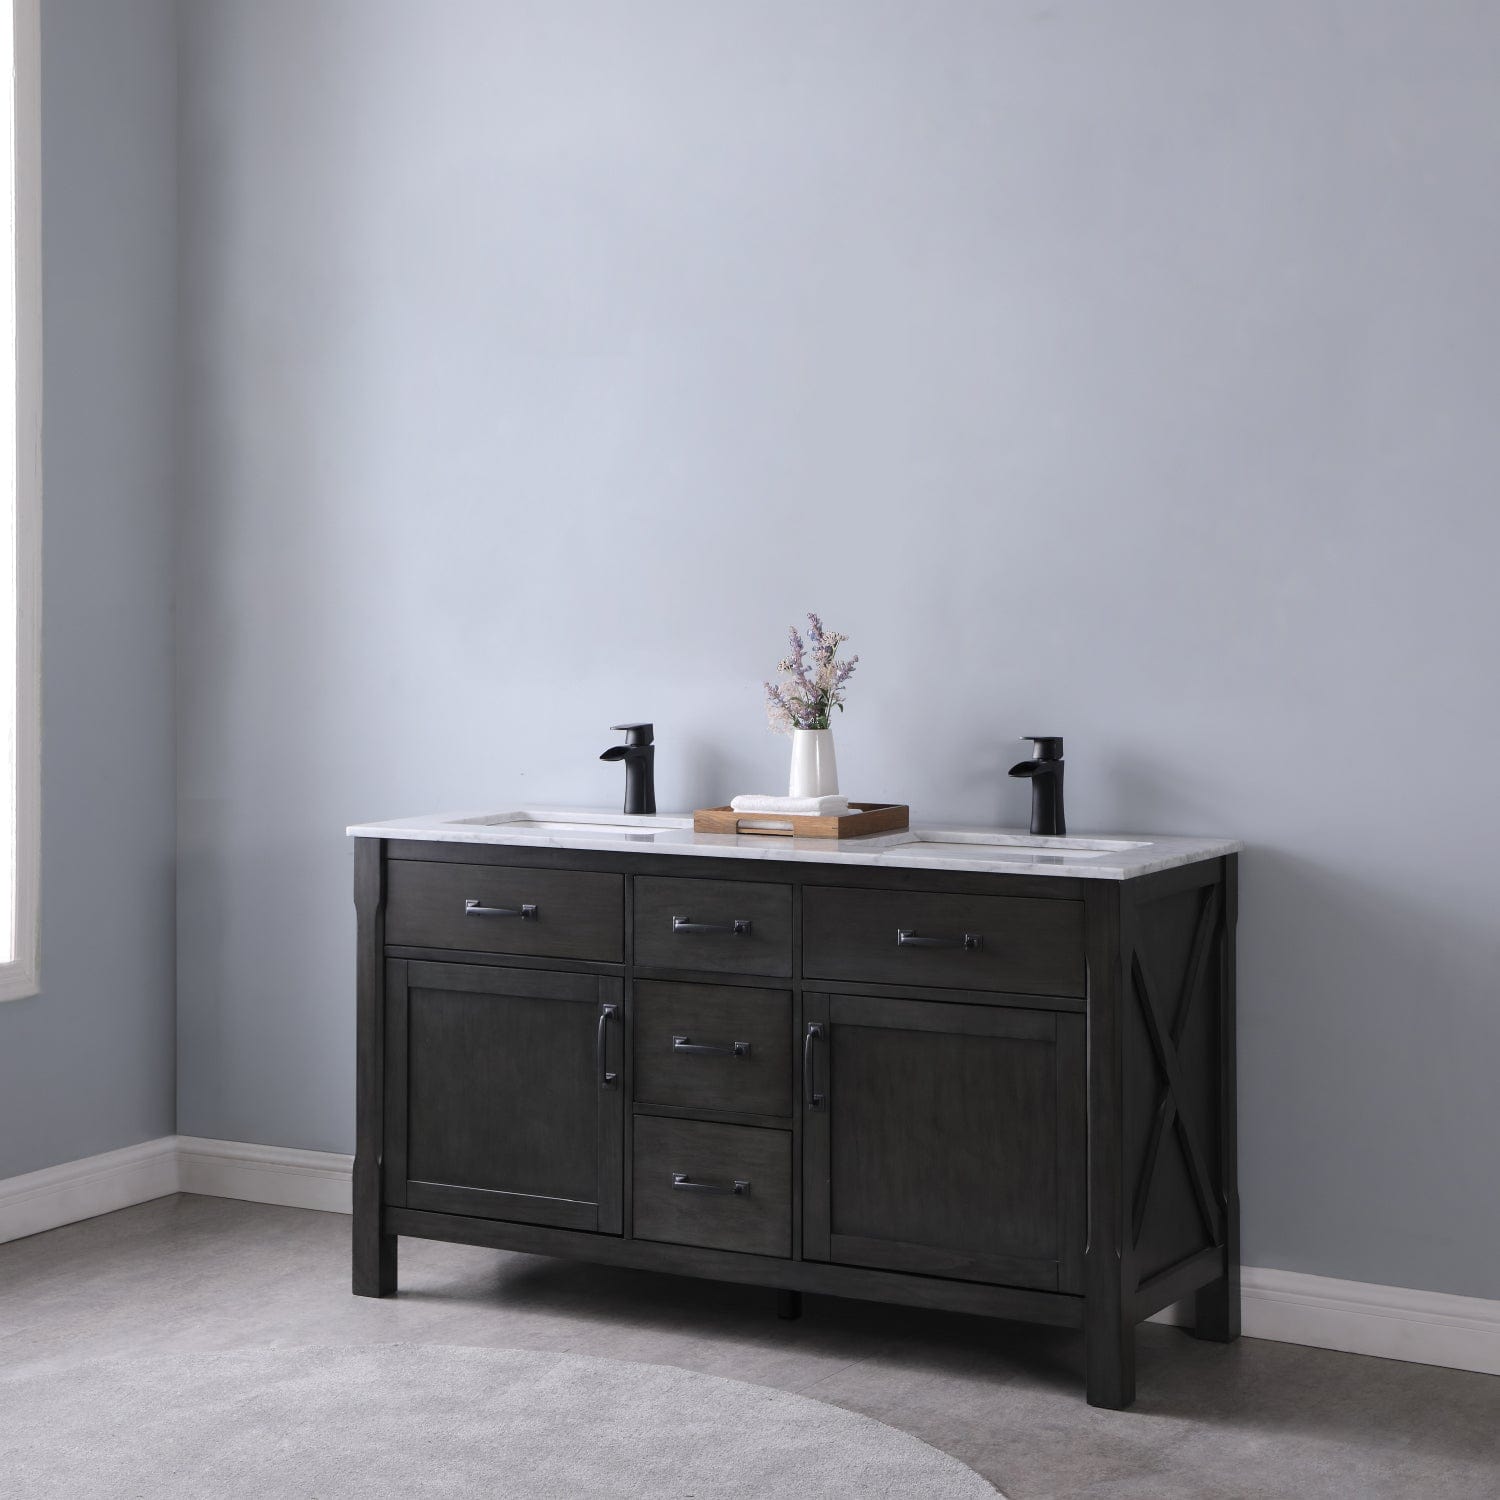 Altair Maribella 60" Double Bathroom Vanity Set in Rust Black and Carrara White Marble Countertop without Mirror 535060-RL-CA-NM - Molaix631112970365Vanity535060-RL-CA-NM